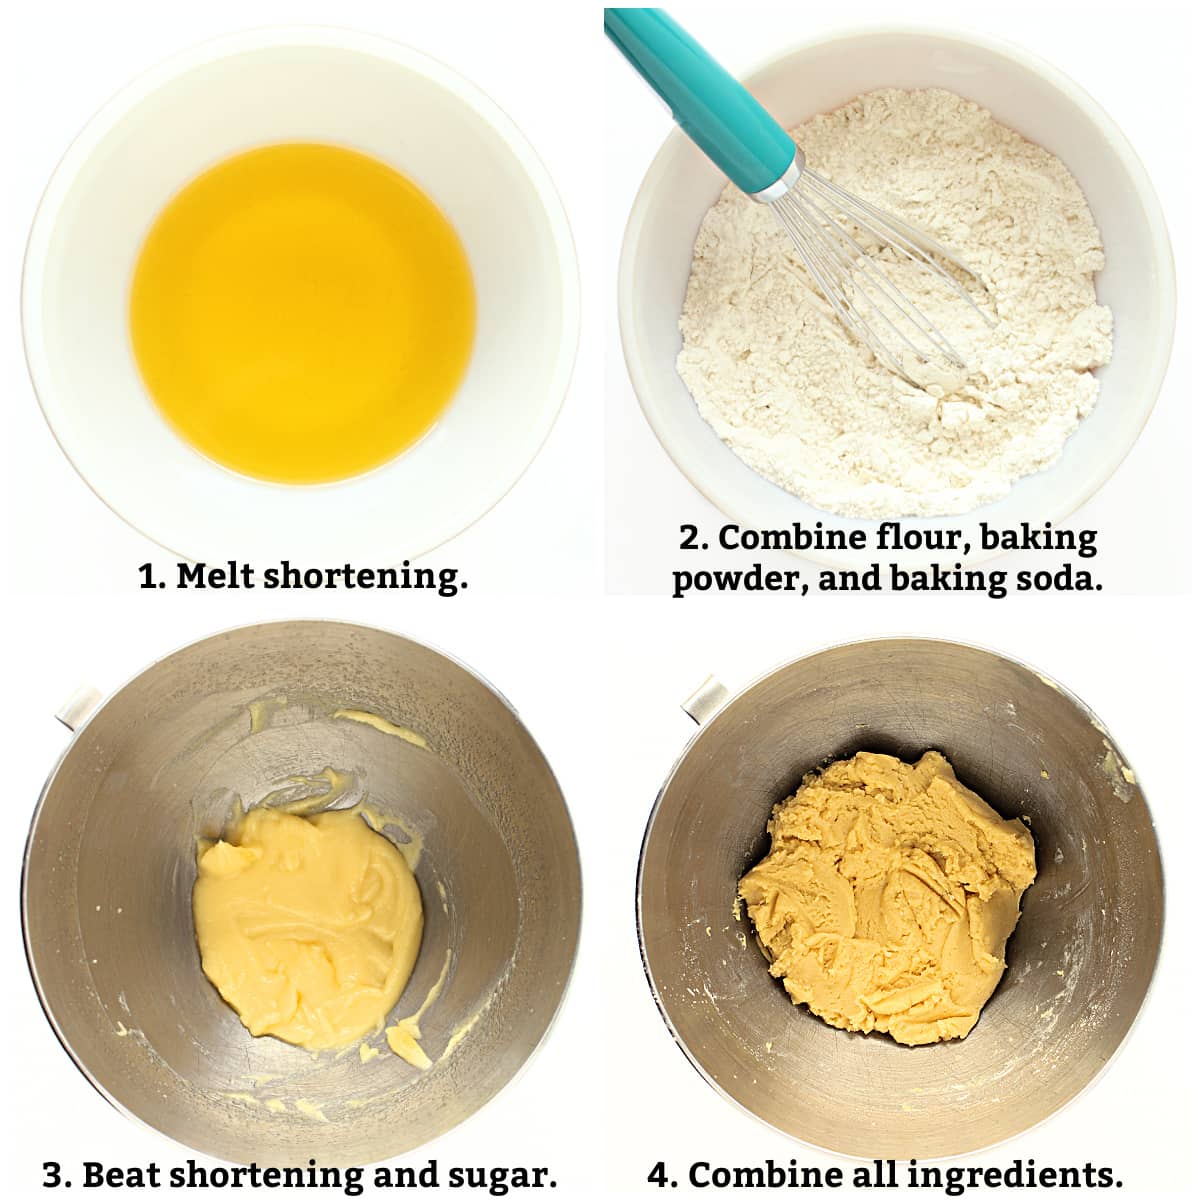 Instructions labeled: melt shortening, combine flour, baking powder/soda , beat shortening and sugar, combine all ingredients.